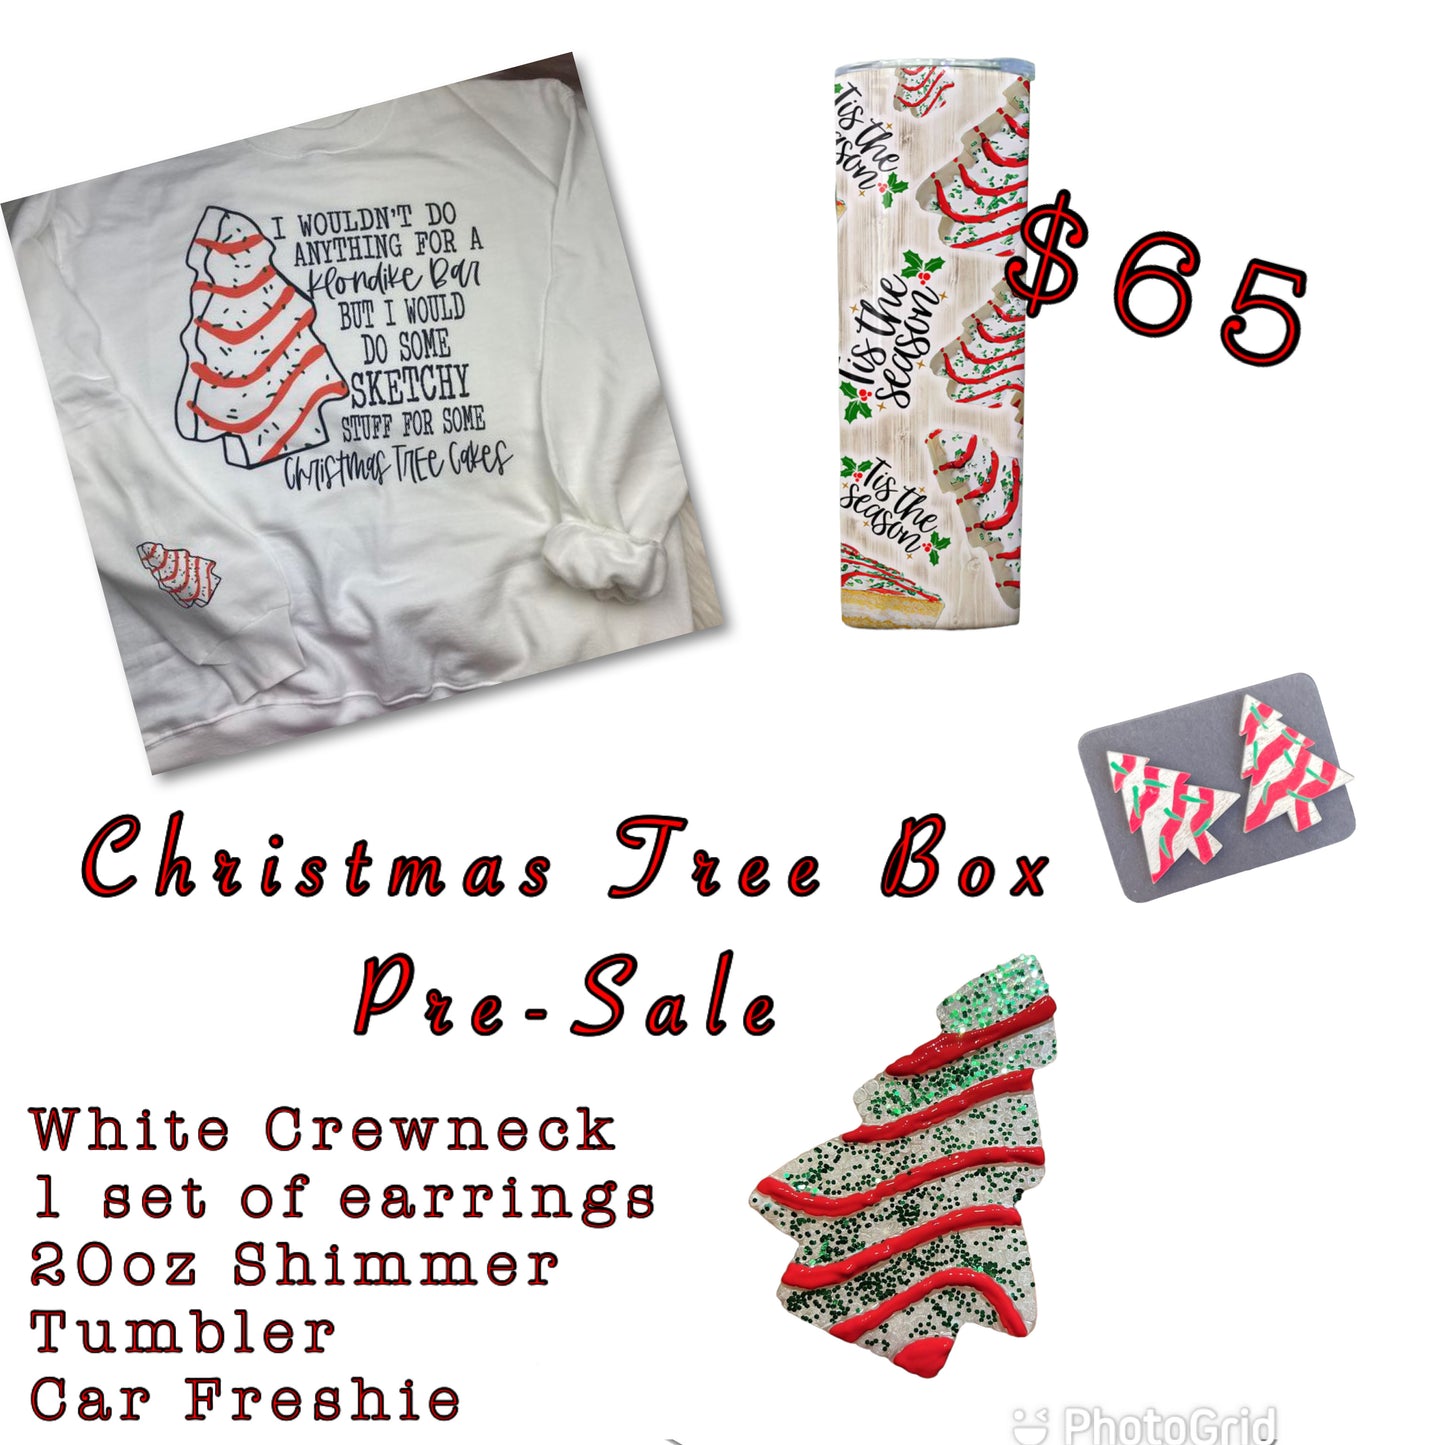 Christmas Cheer Box pre-sale